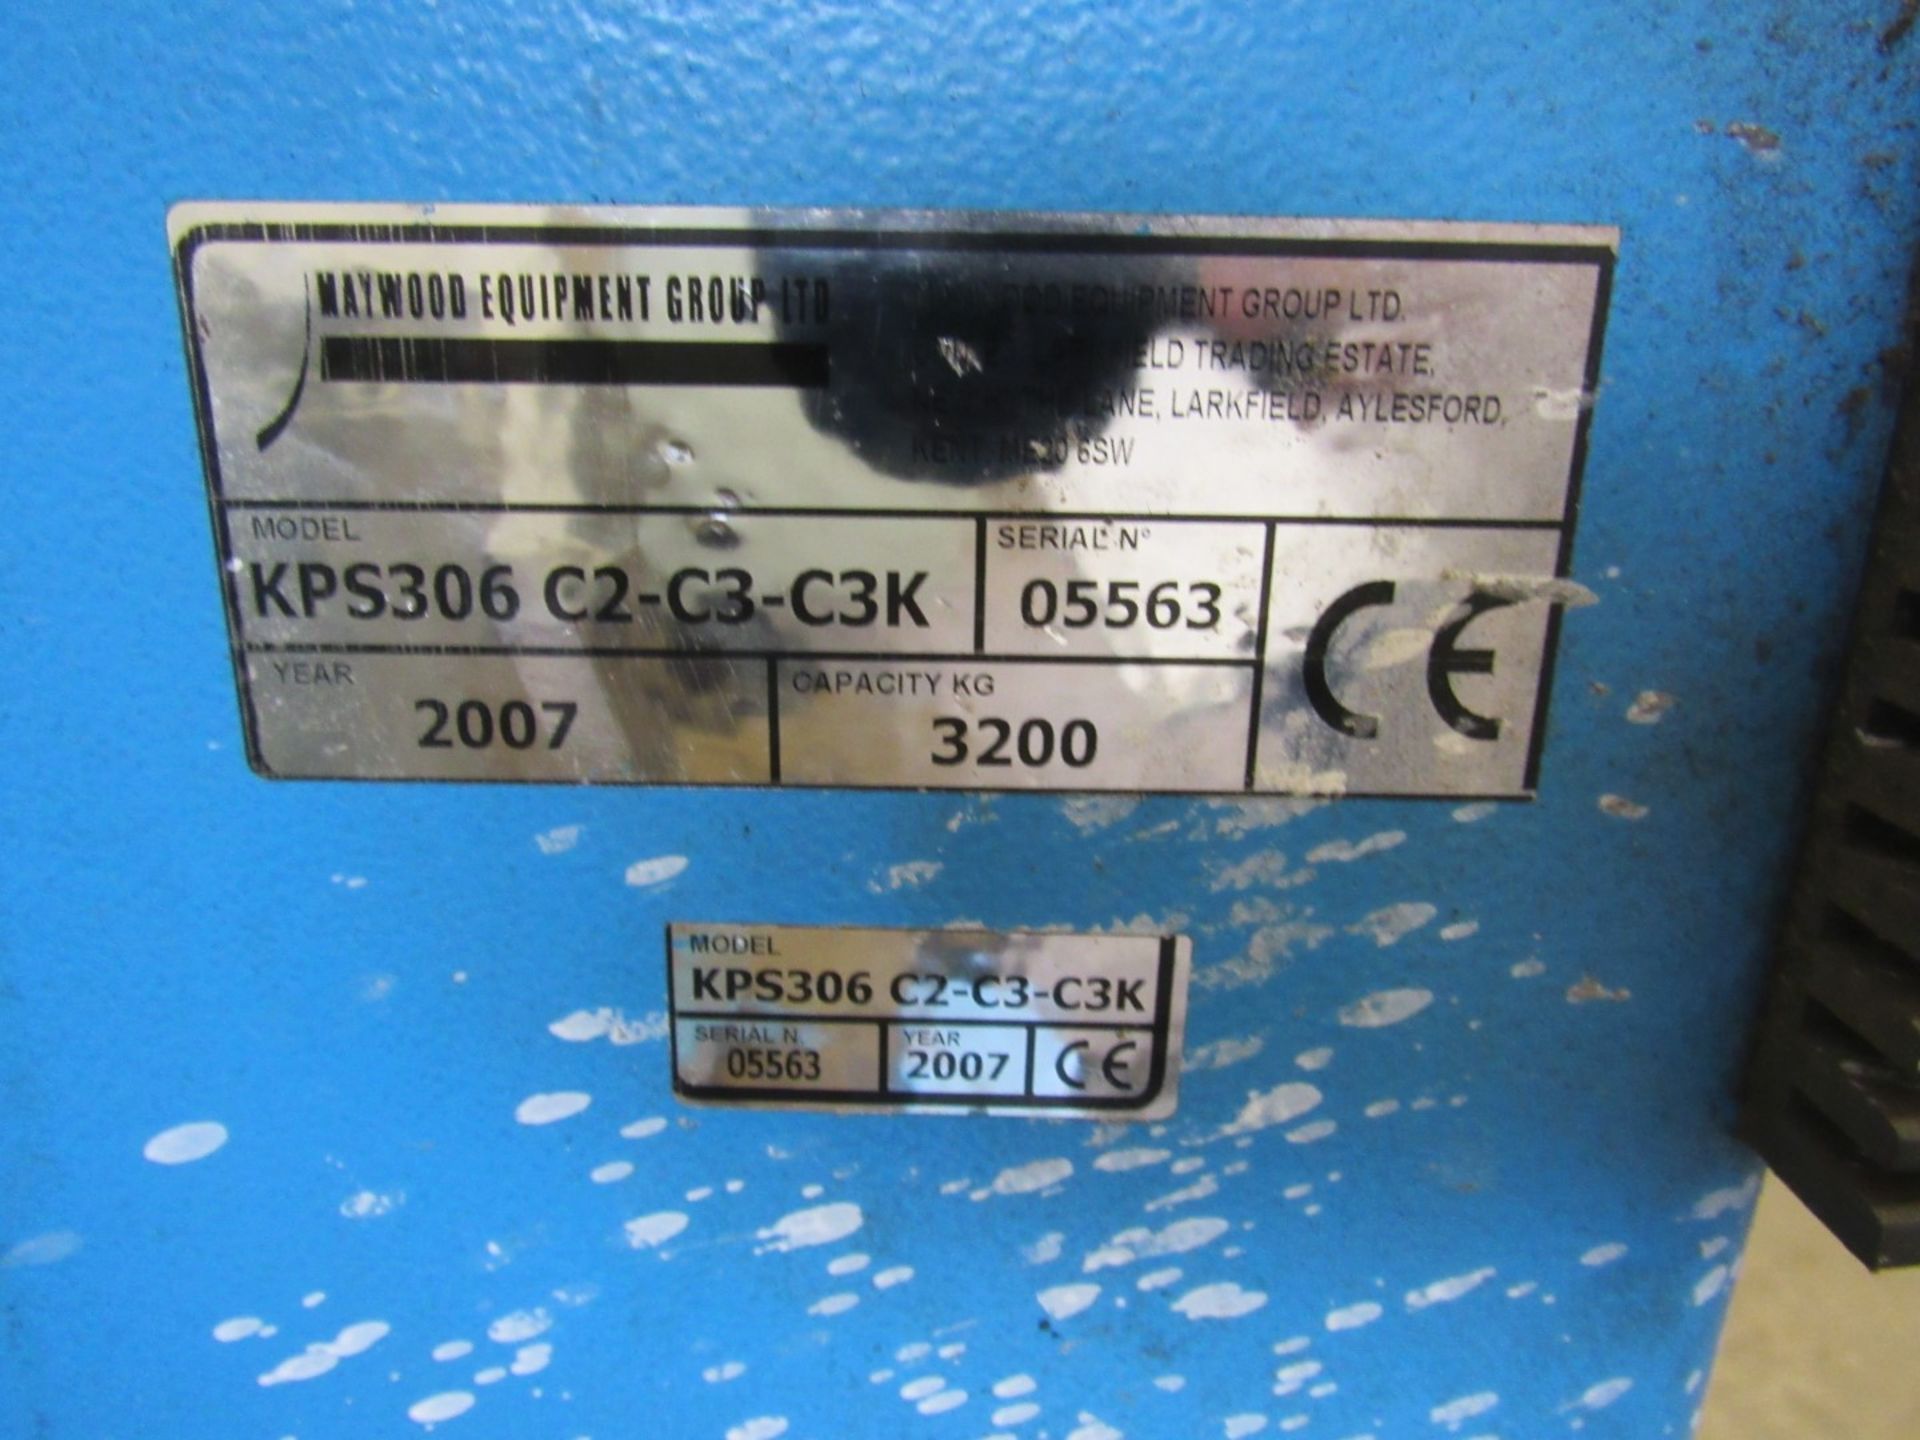 Maywood KPS306 C2-C3-C3K 2 Post Vehicle Lift, 3200 - Image 4 of 4